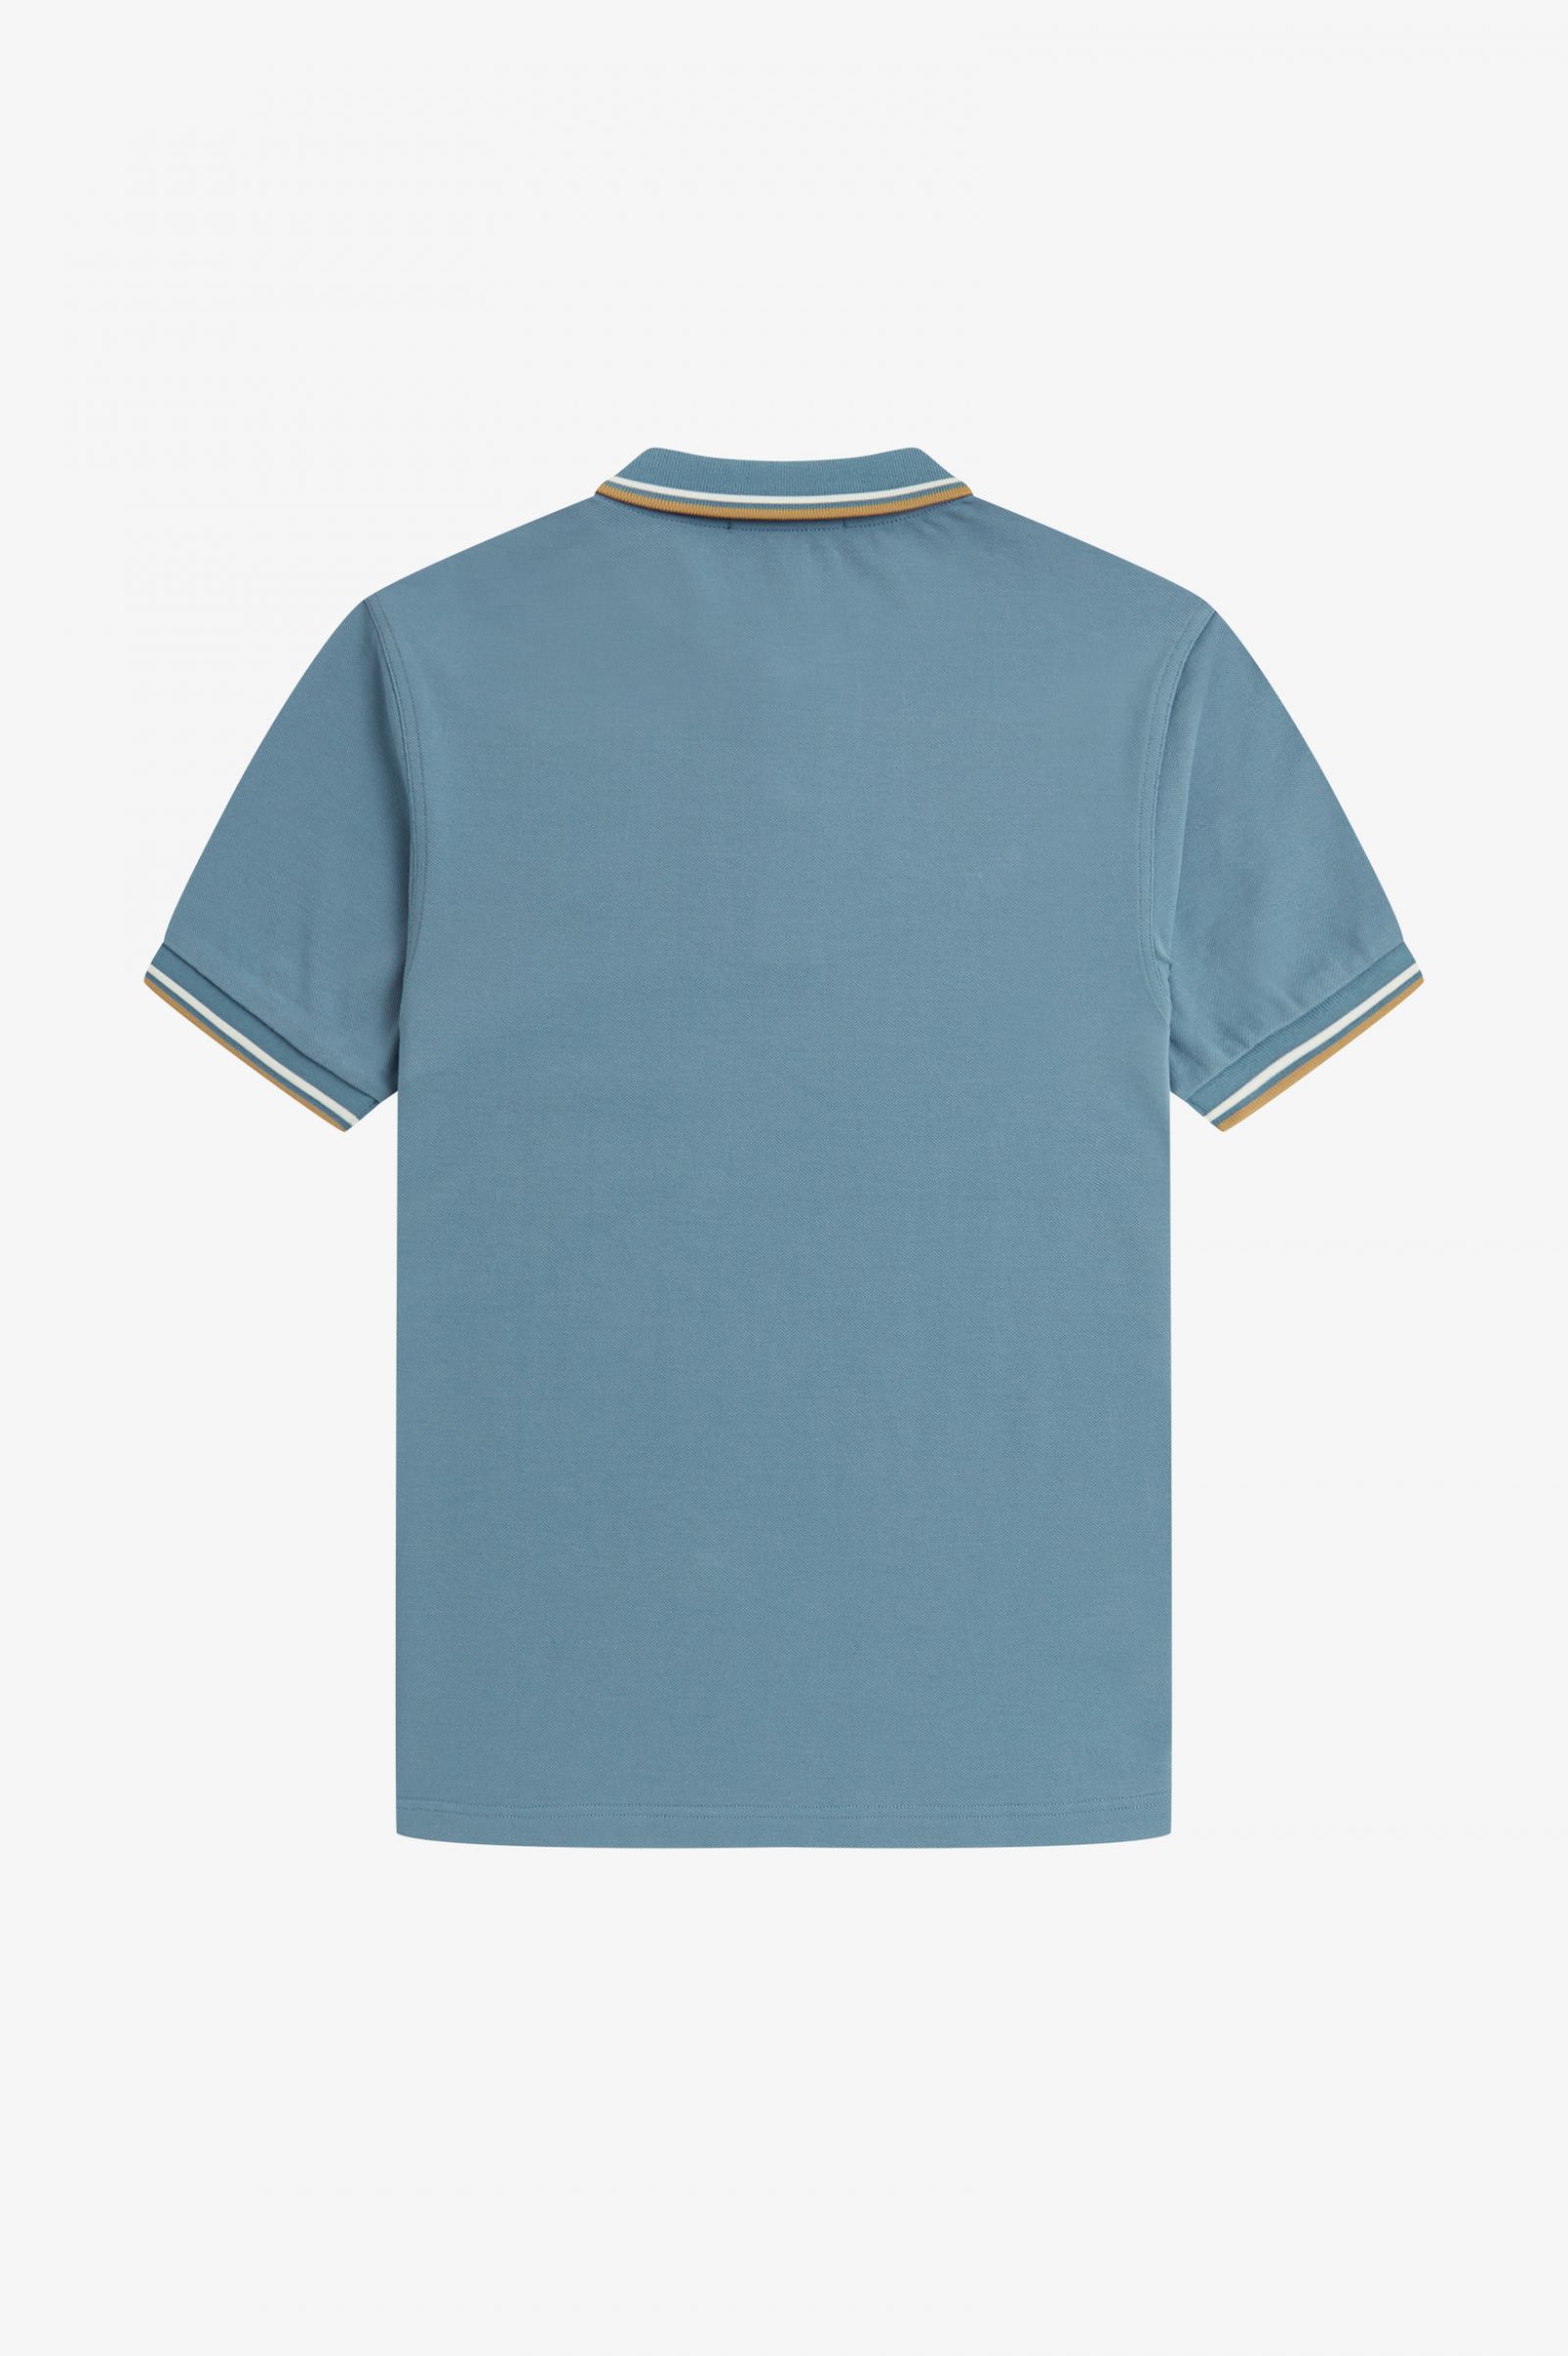 Fred Perry Twin Tipped Herren Polo Shirt in Blau/Ecru/1964 Gold